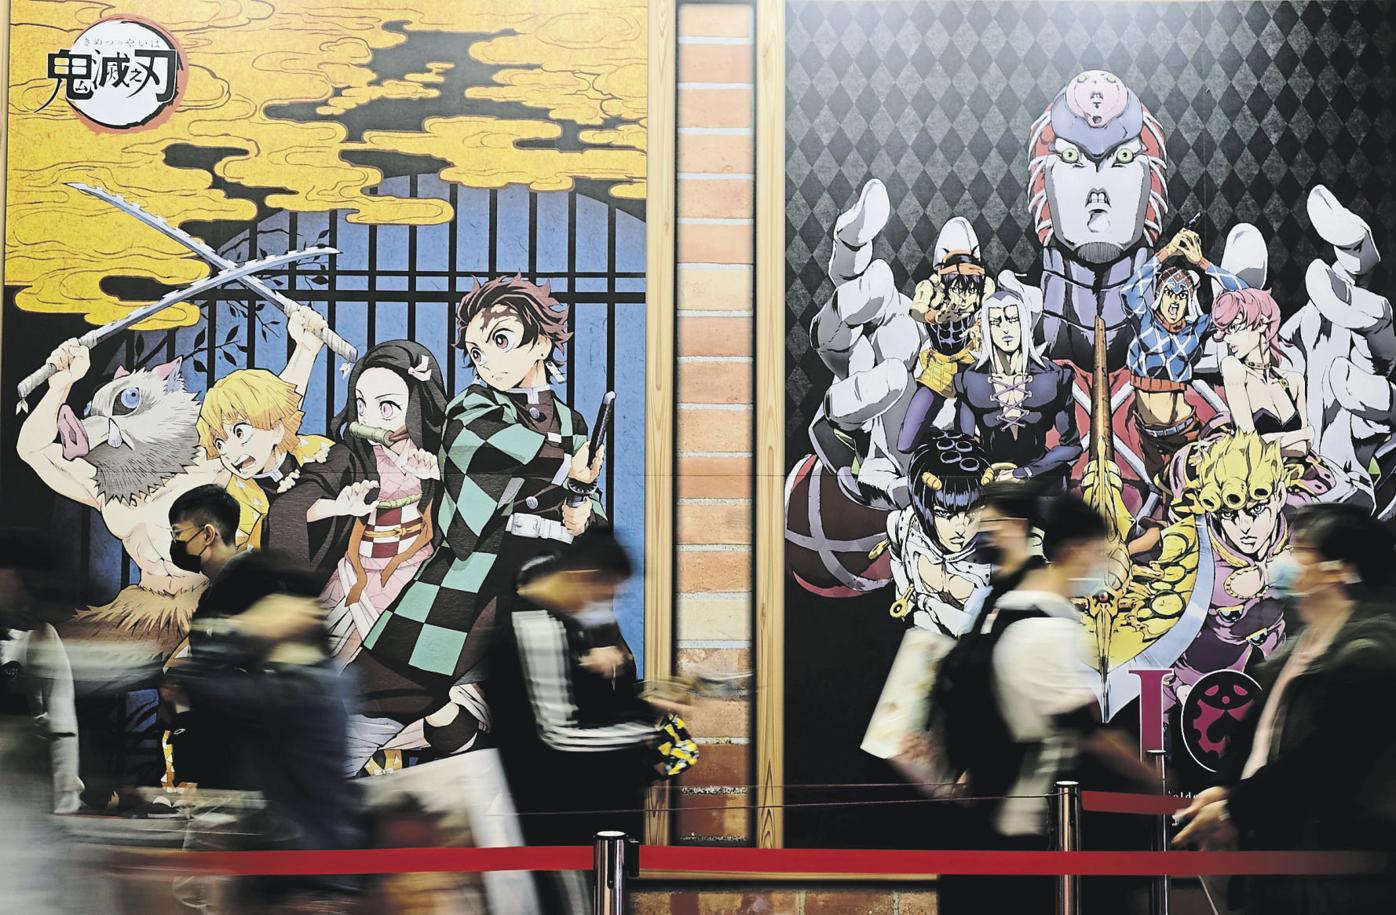 Tokyo Shibuya Station 100-Foot Anime Mural Info